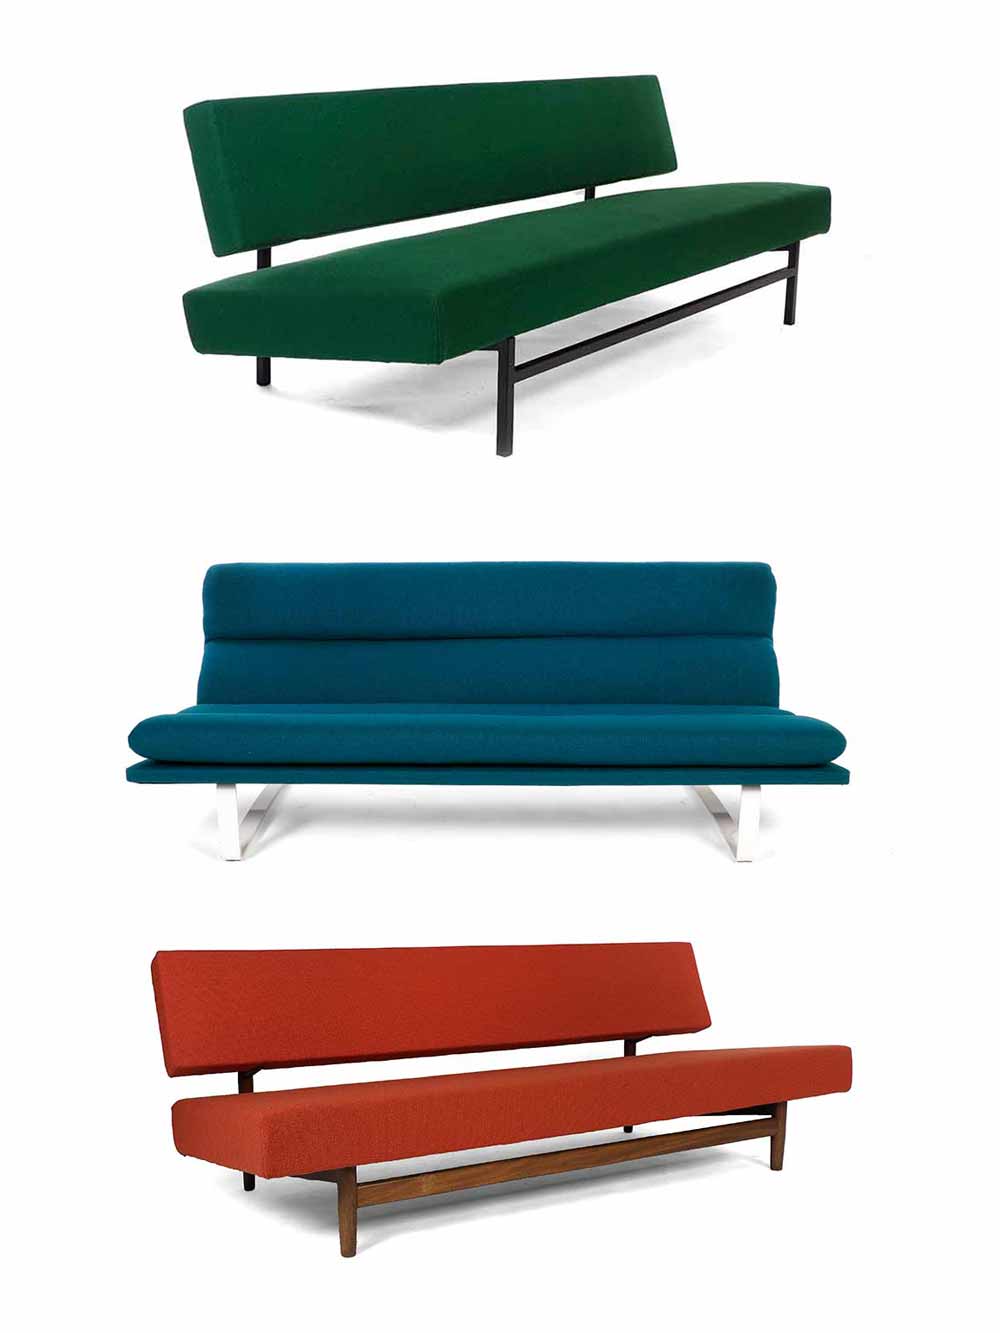 Claire Taalkunde redden Vintage design meubels - VAEN